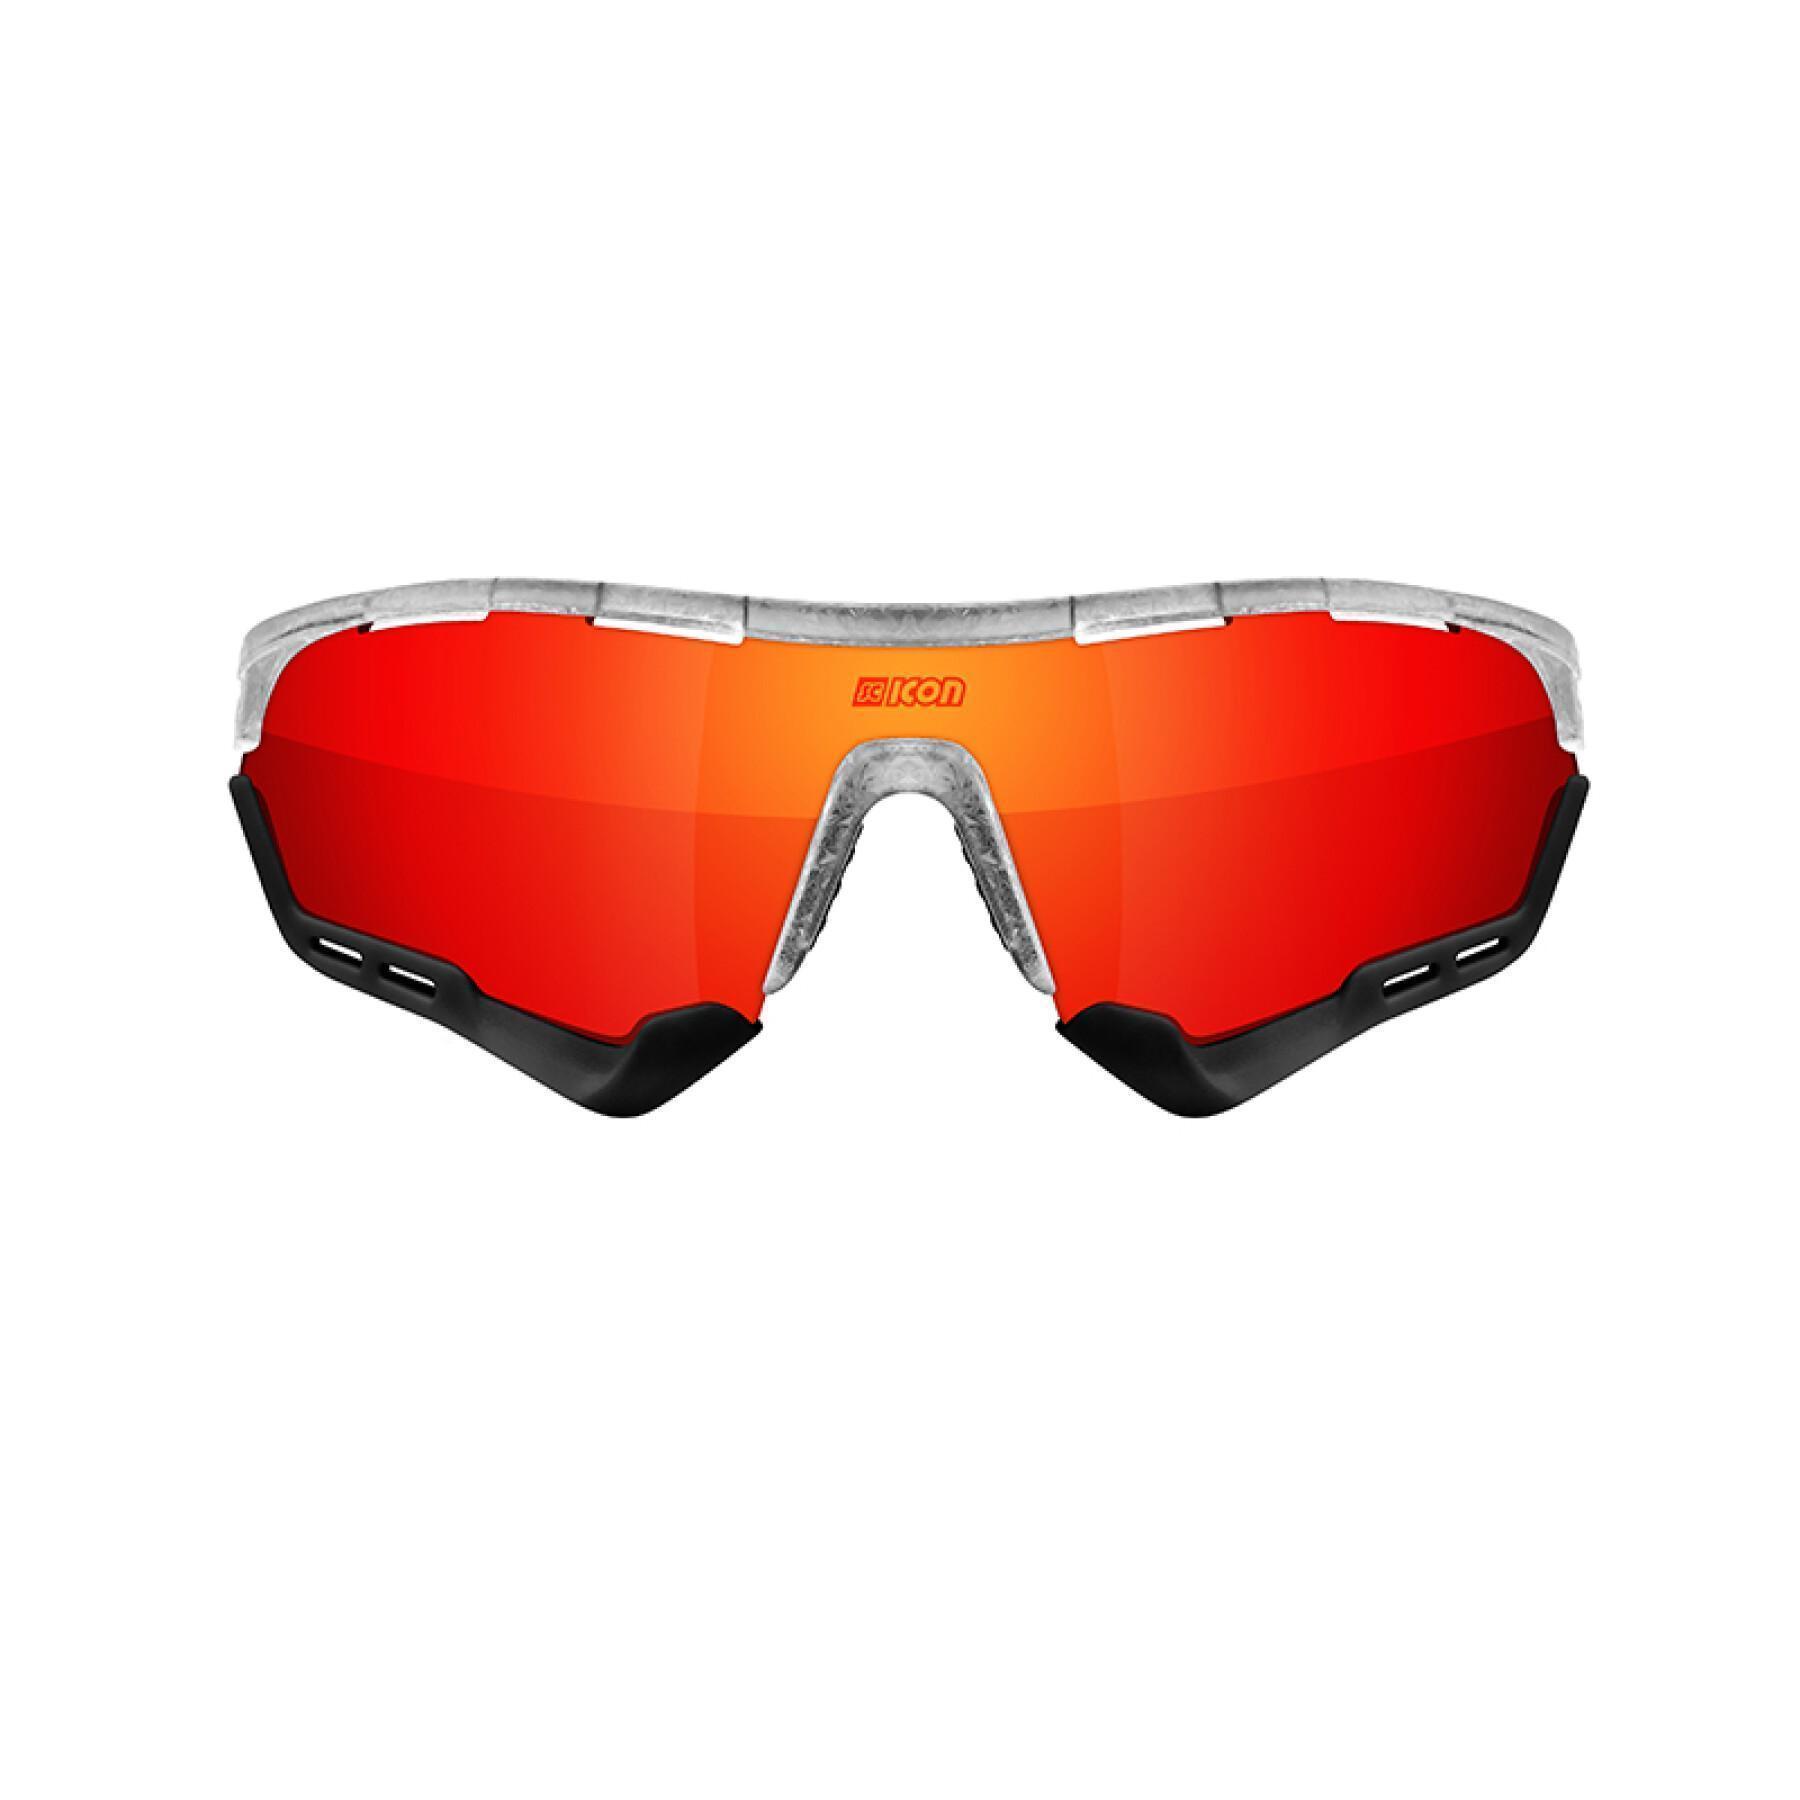 Brillen Scicon aerotech scnpp verre multi-reflet rouges